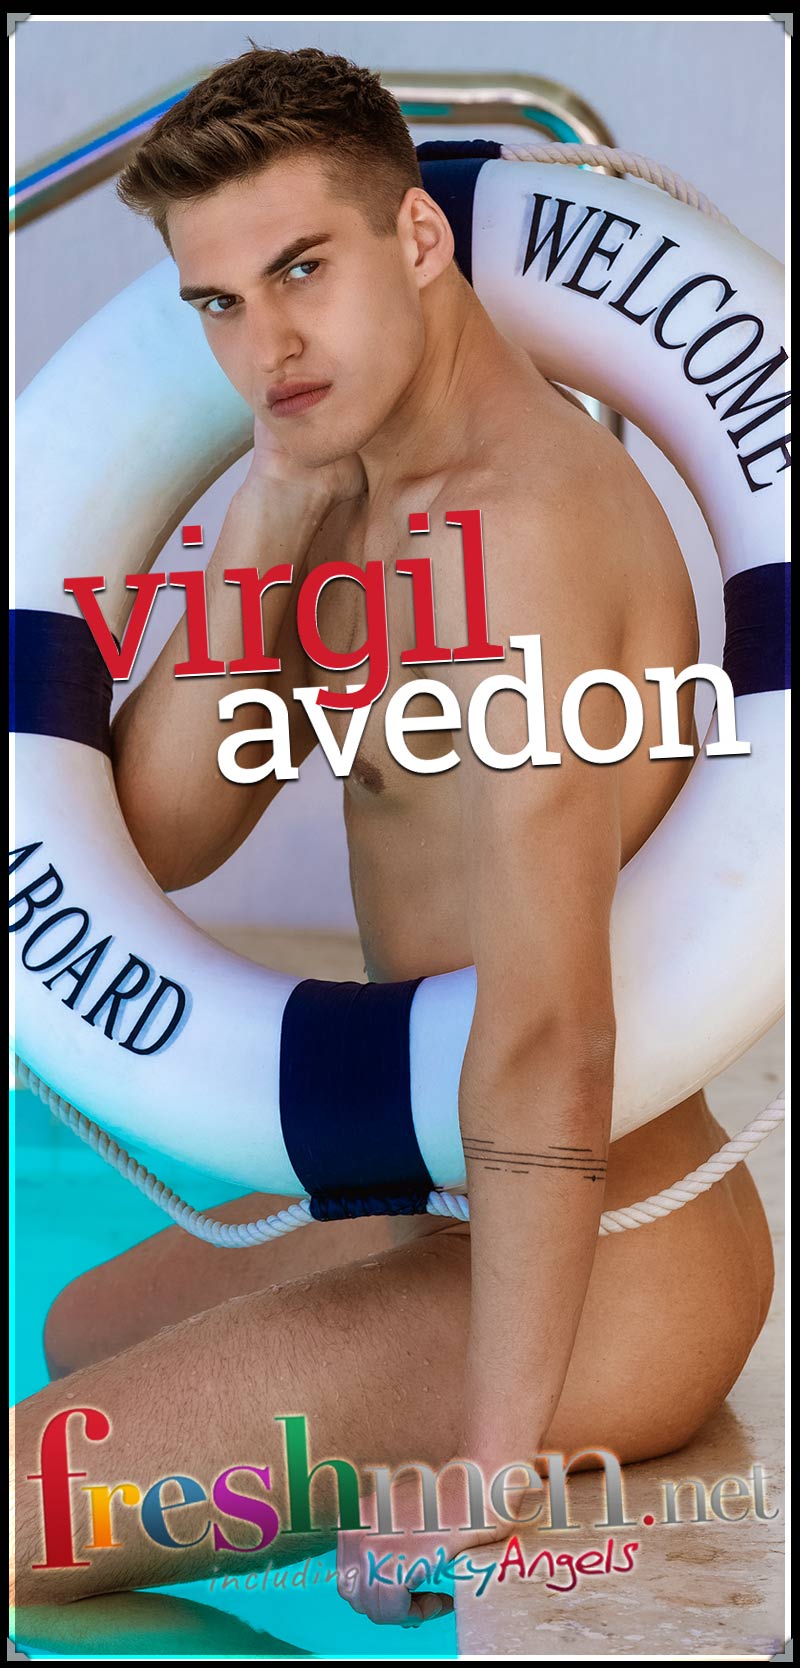 Introducing Virgil Avedon at Freshmen.net